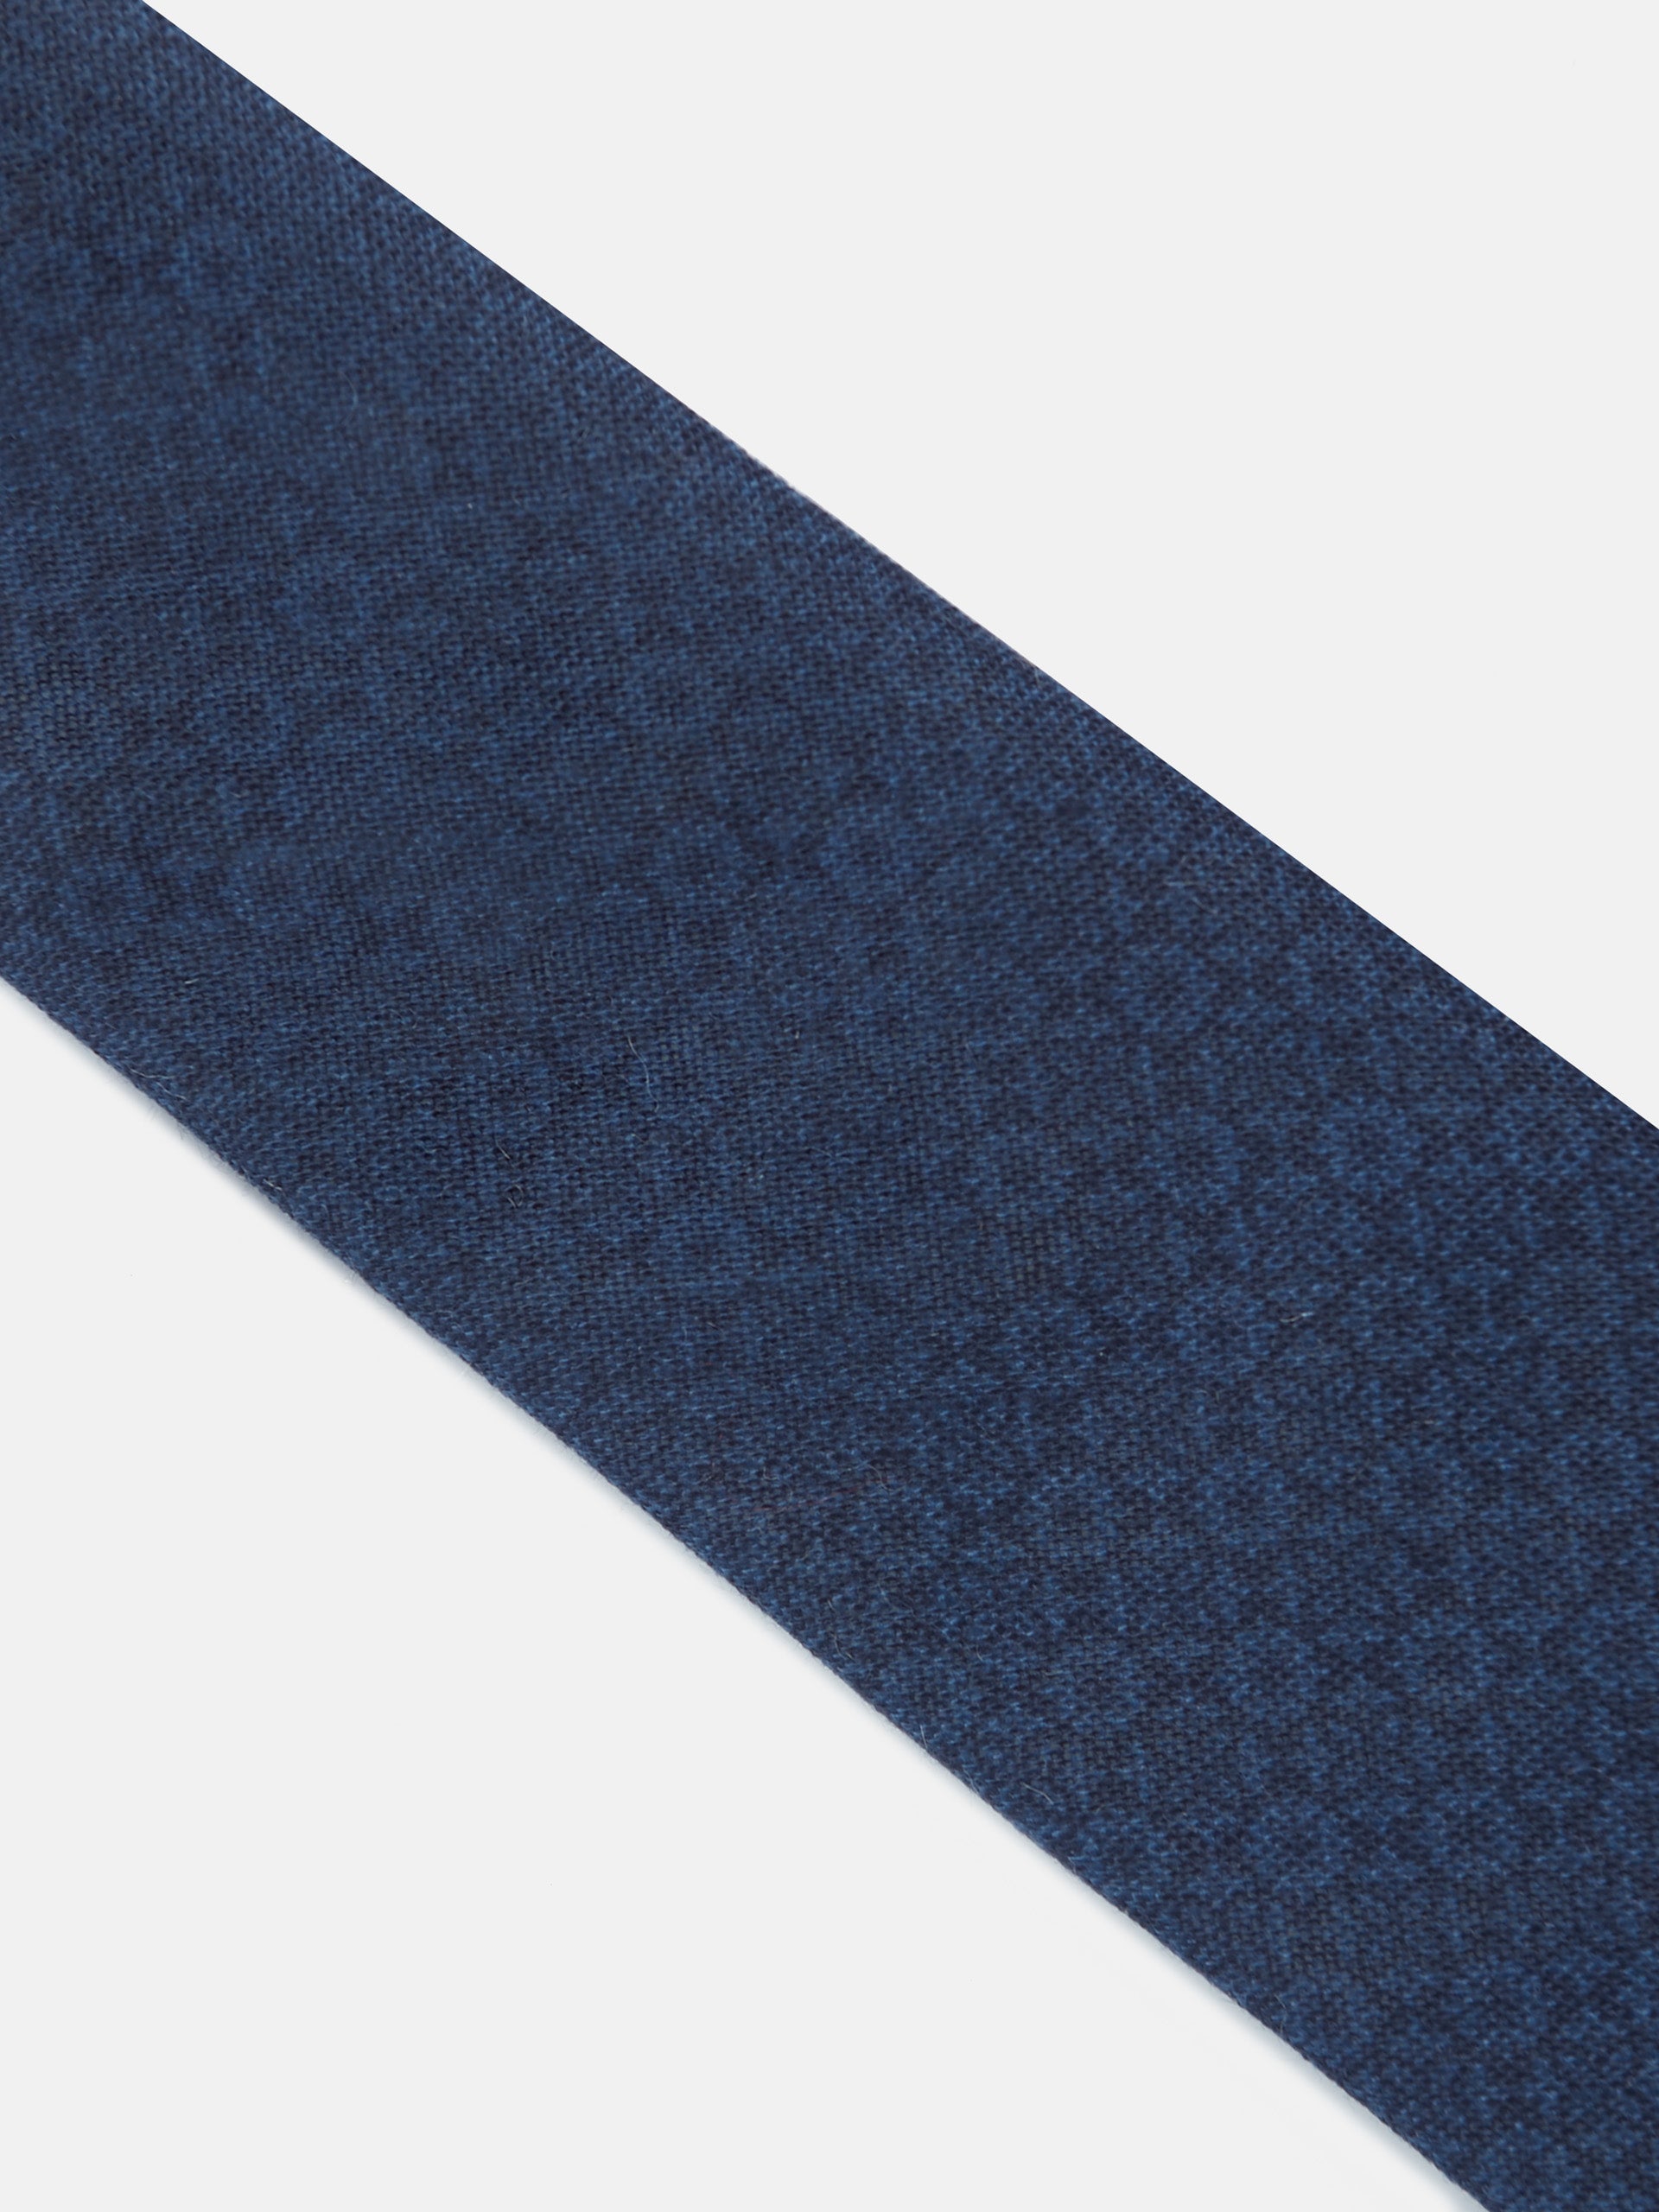 Asti tie with blue motifs